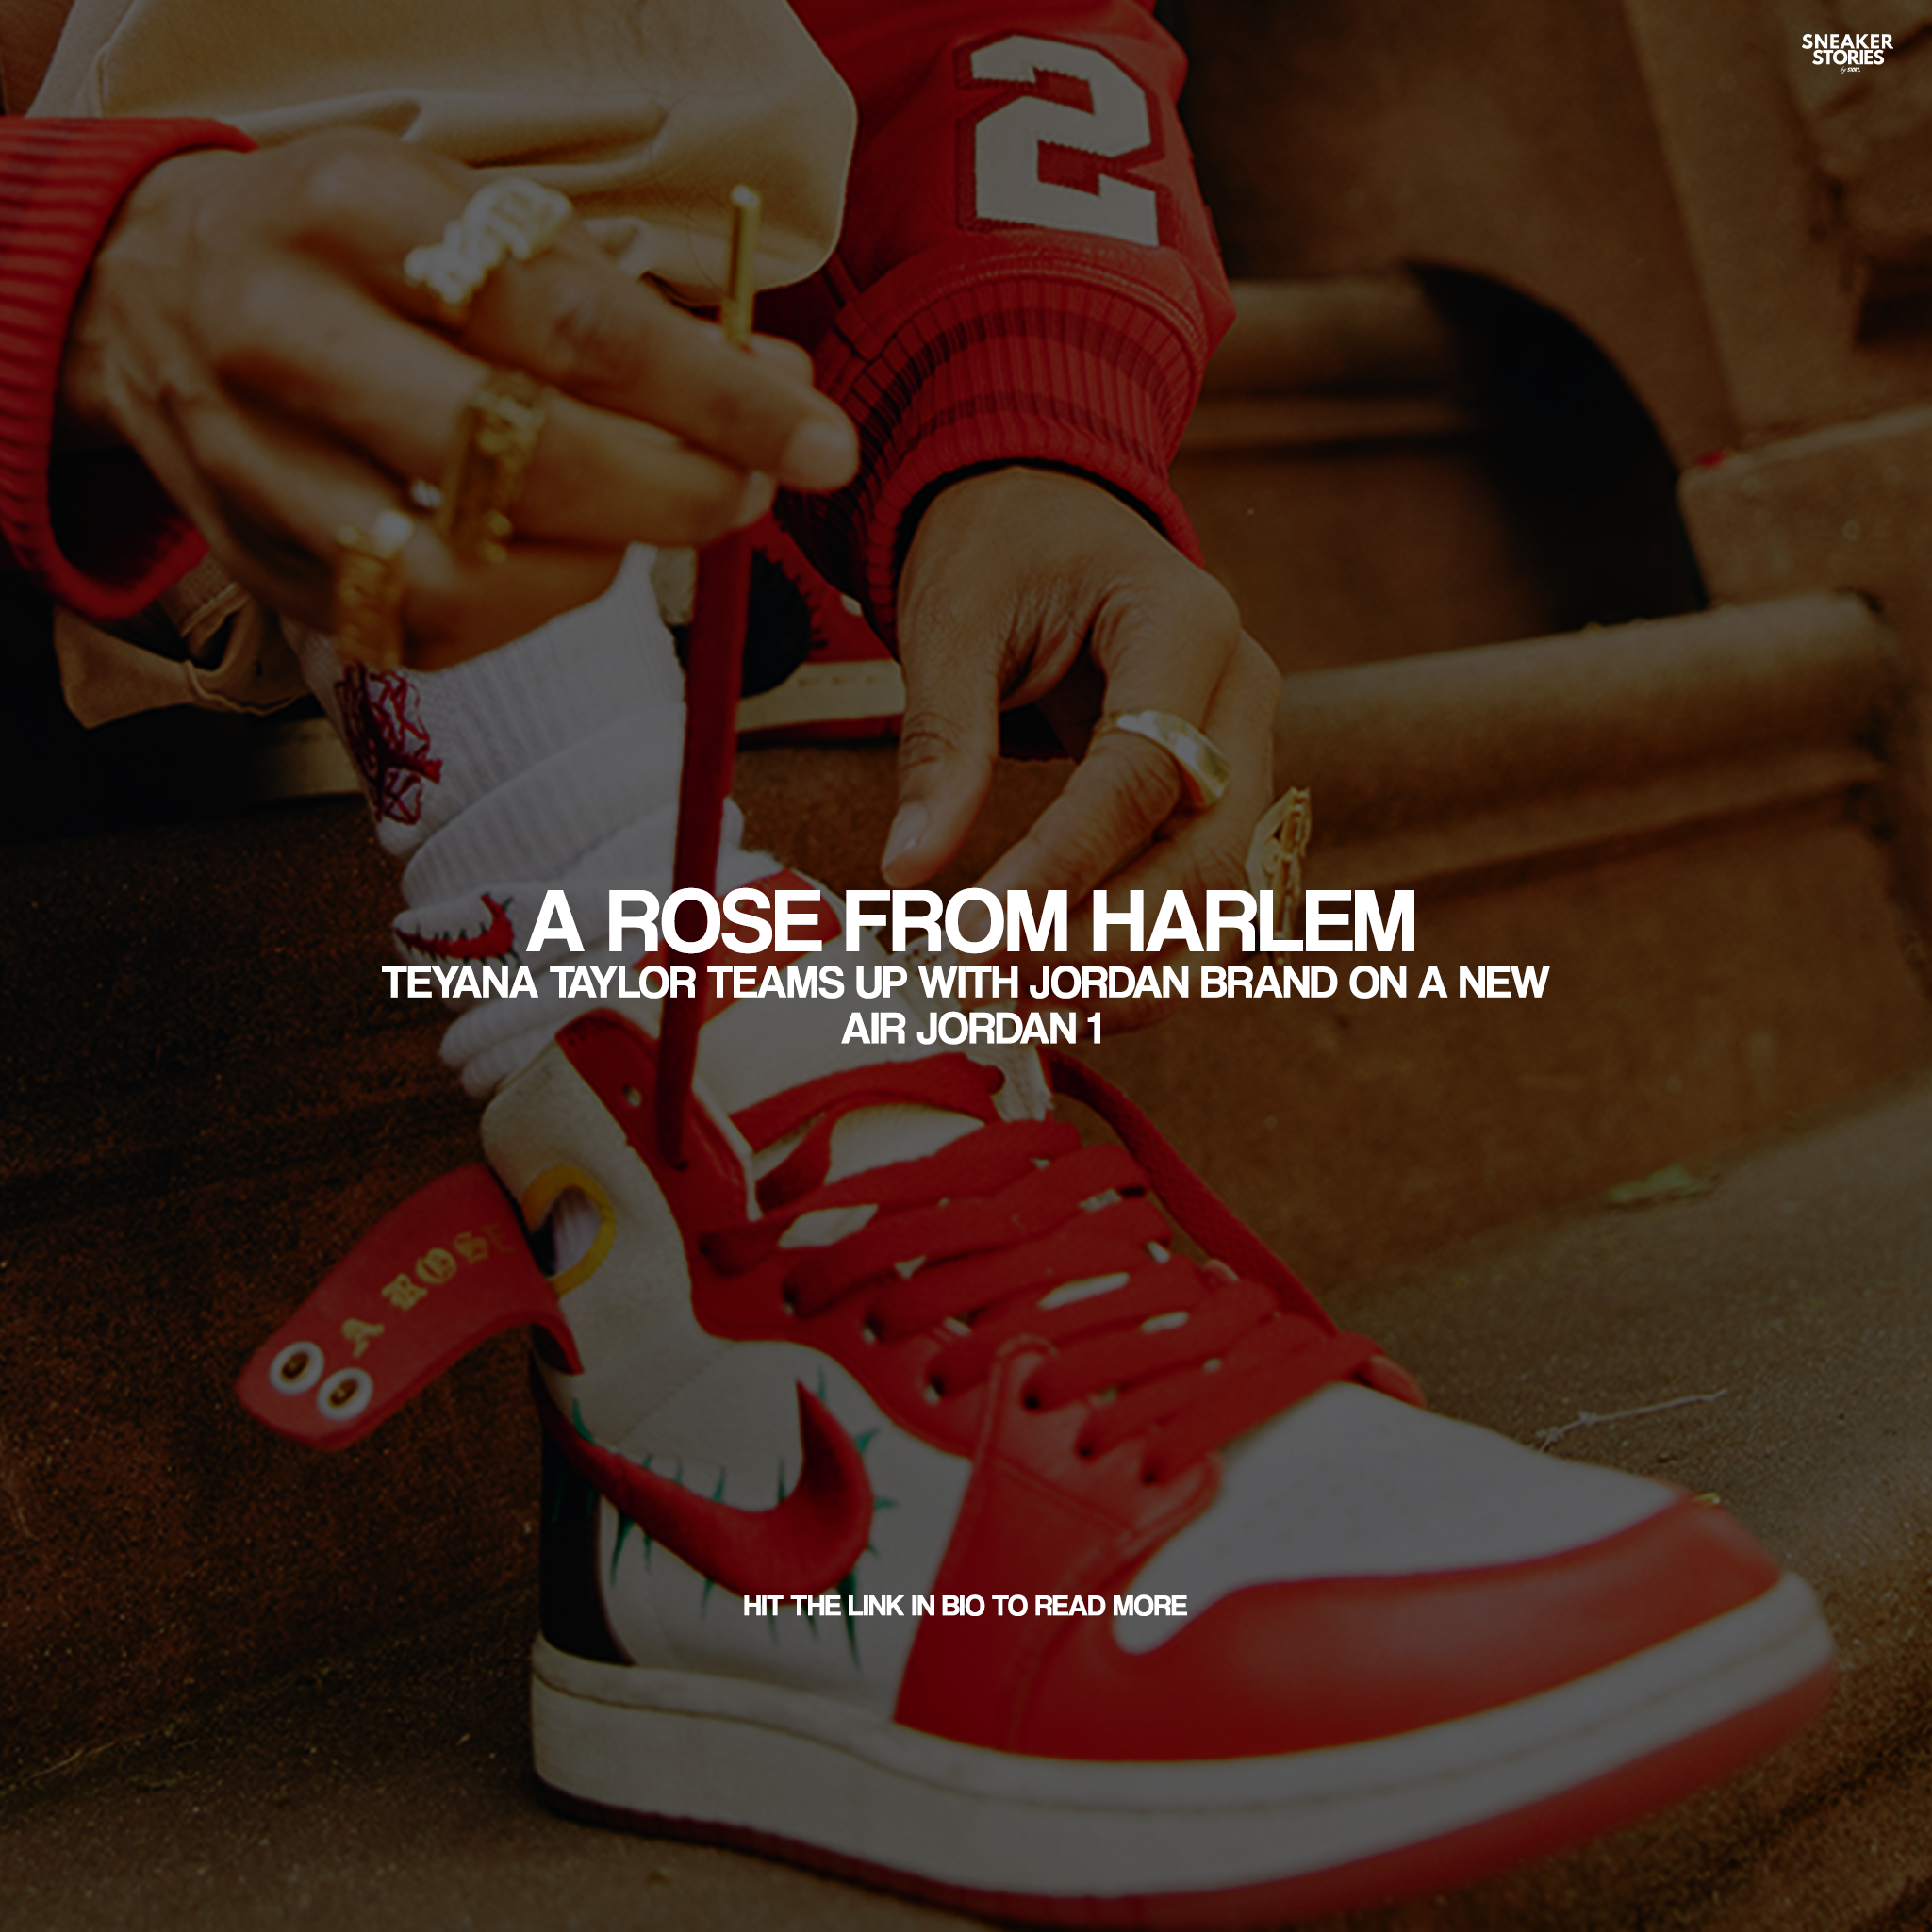 A Rose From Harlem: Teyana Taylor teams up with Jordan brand on a new  Air Jordan 1